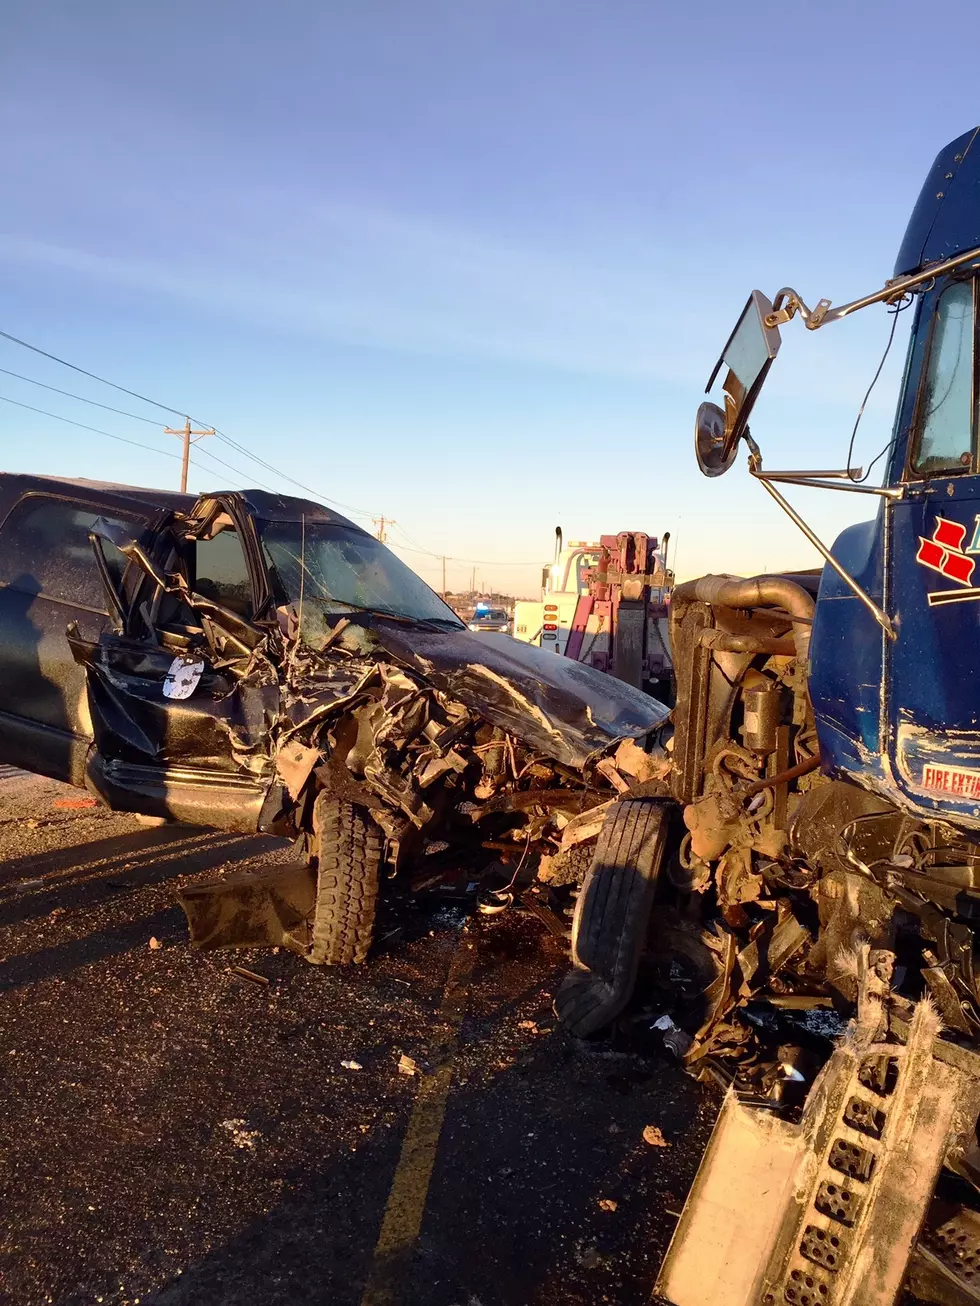 Driver Injured in Early Morning Crash between Pickup Truck, 18 Wheeler